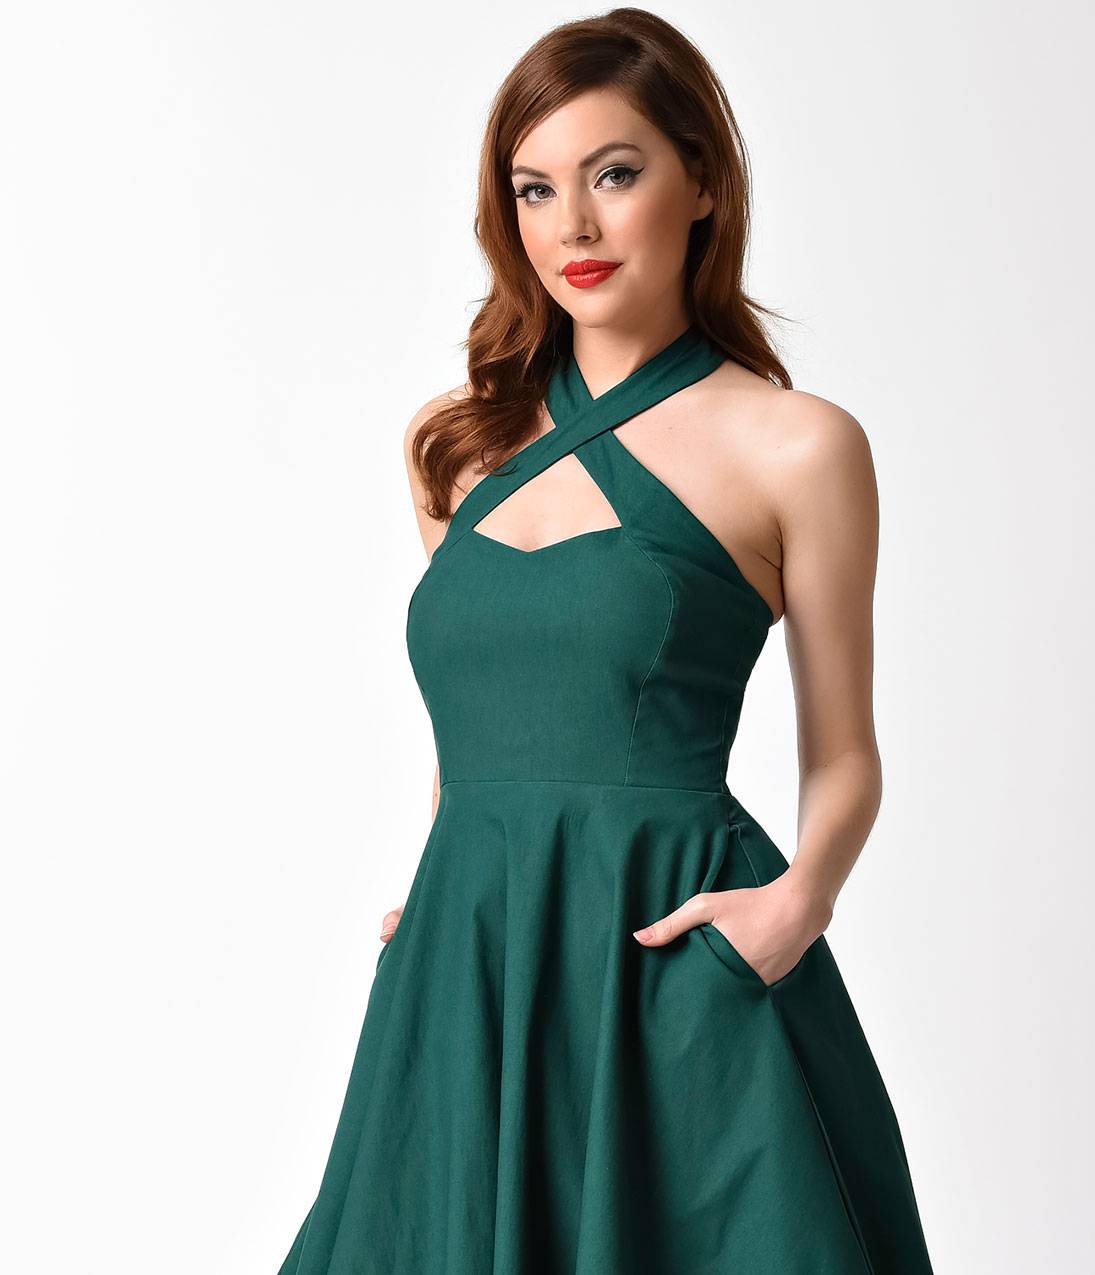 Unique Vintage 1950s Style Emerald Green Stretch Sleeved Devon Swing Dress K006